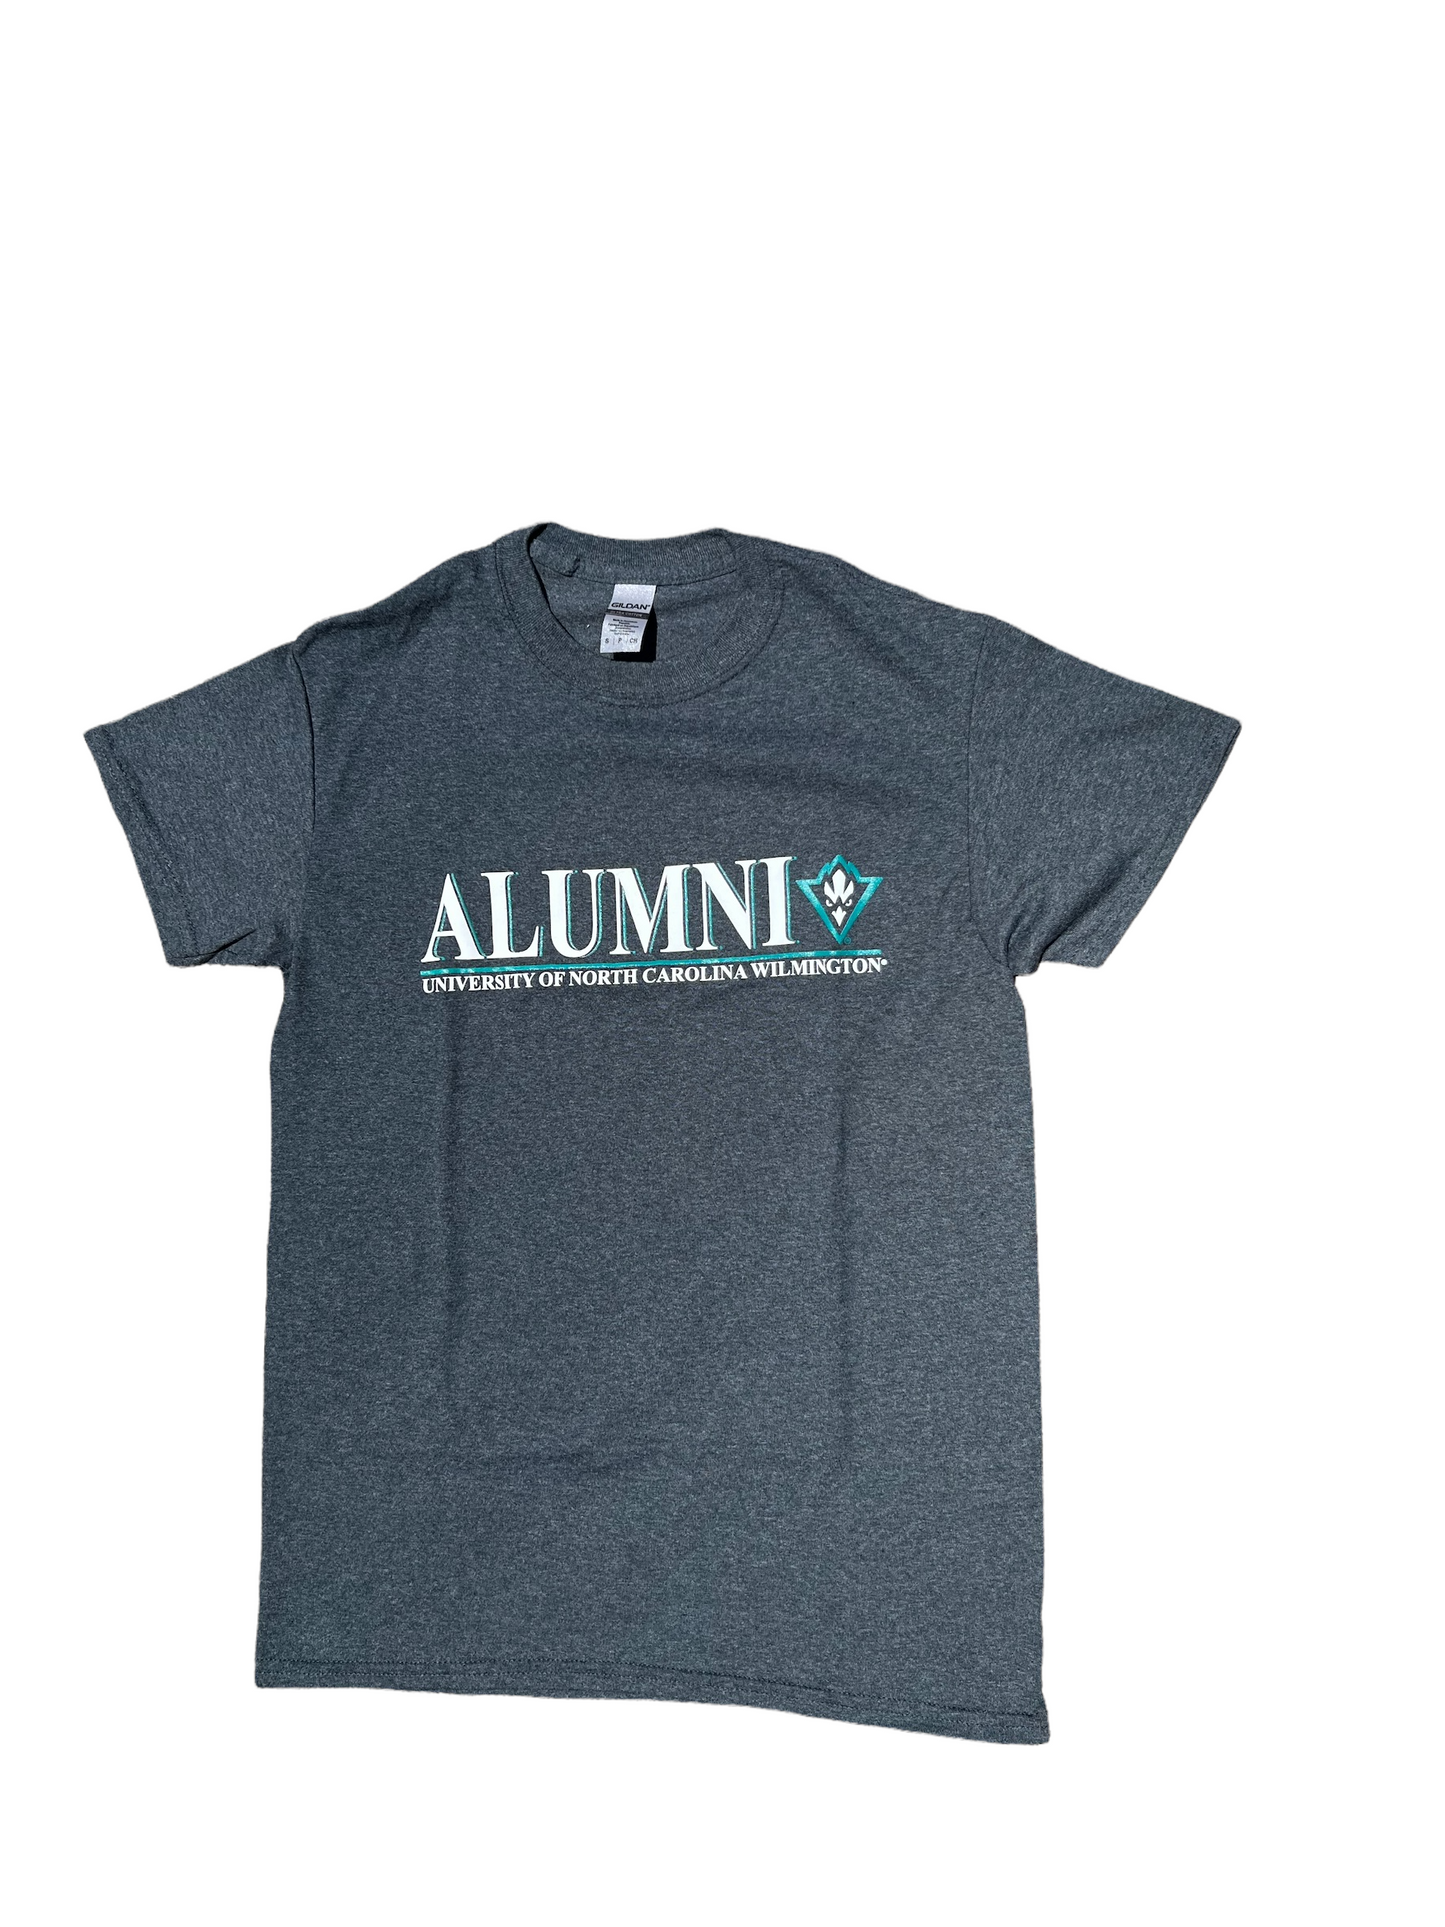 UNCW Alumni -  T Shirt - Dark Heather